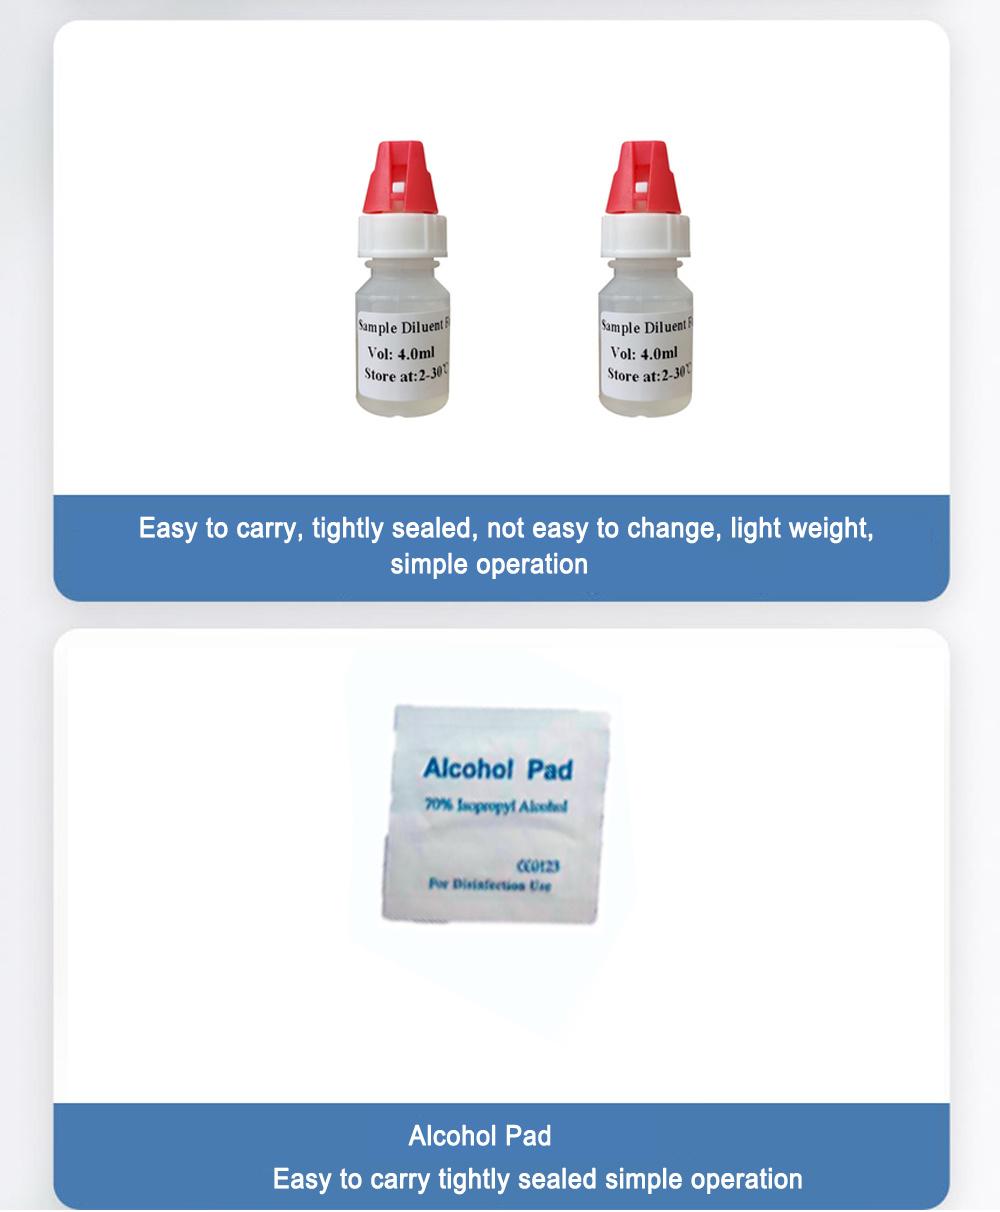 Rapid Test Antigen Diagnostic Kits for Malaria